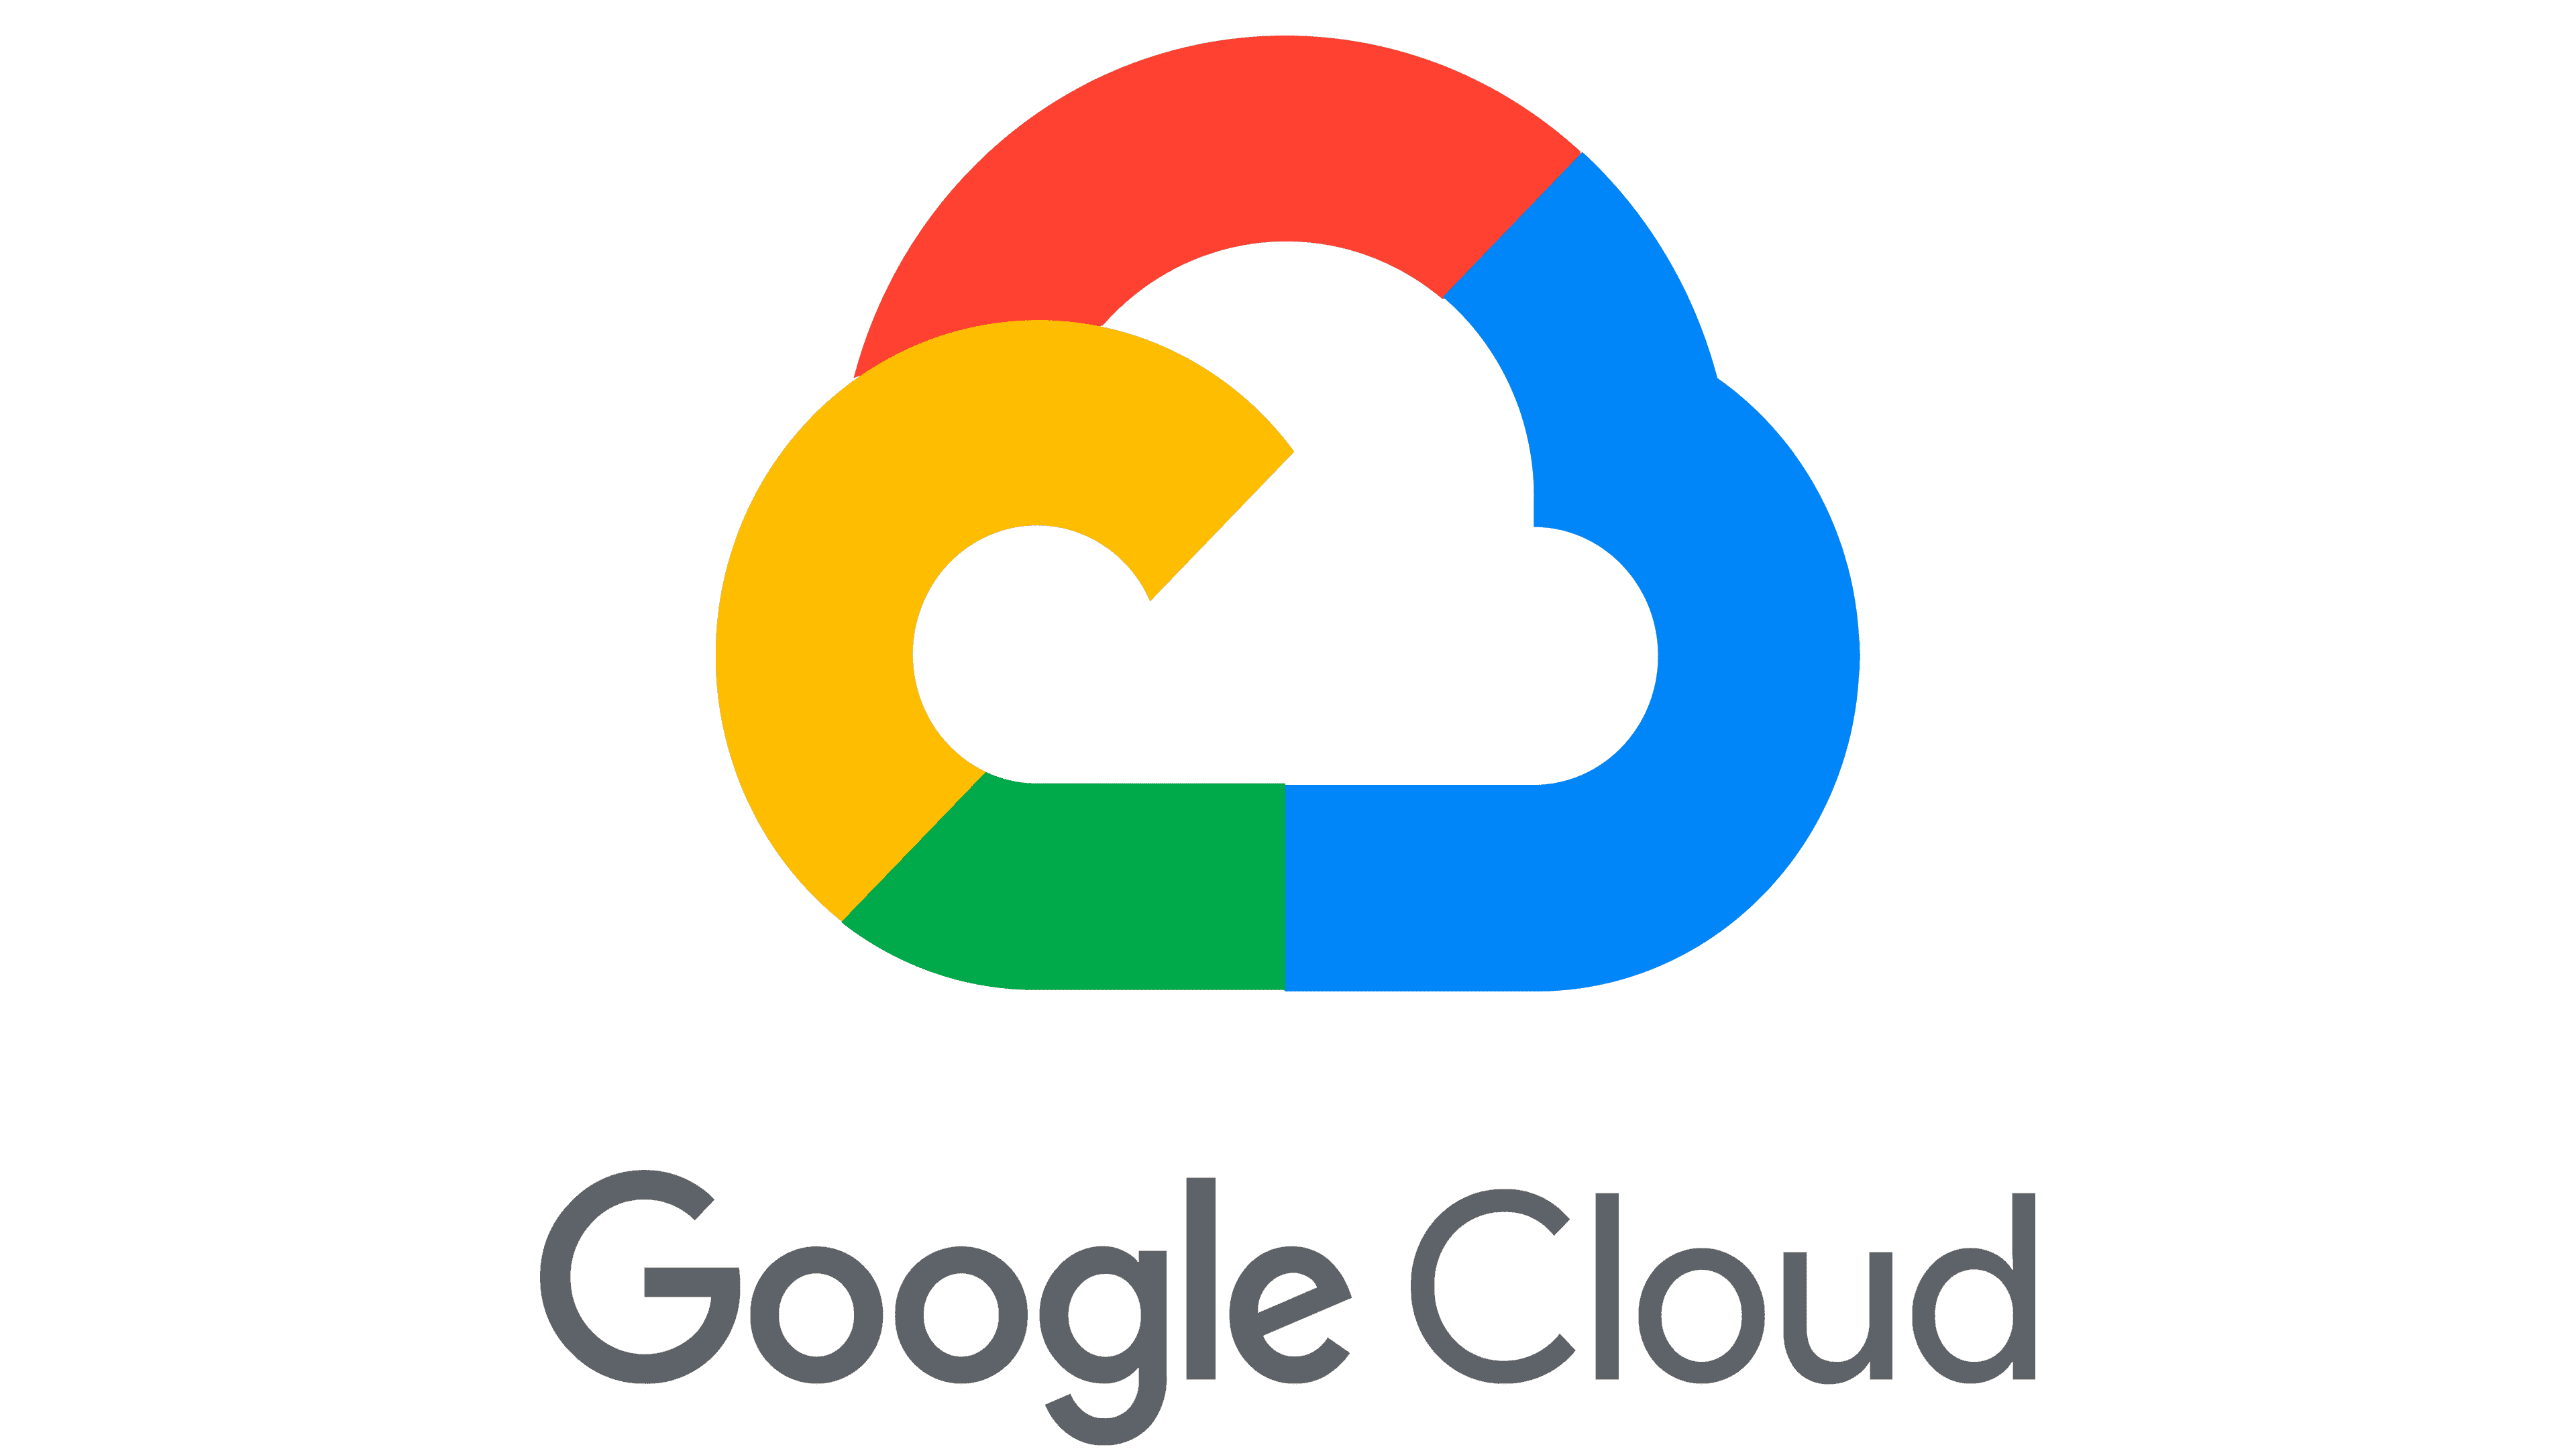 google-cloud